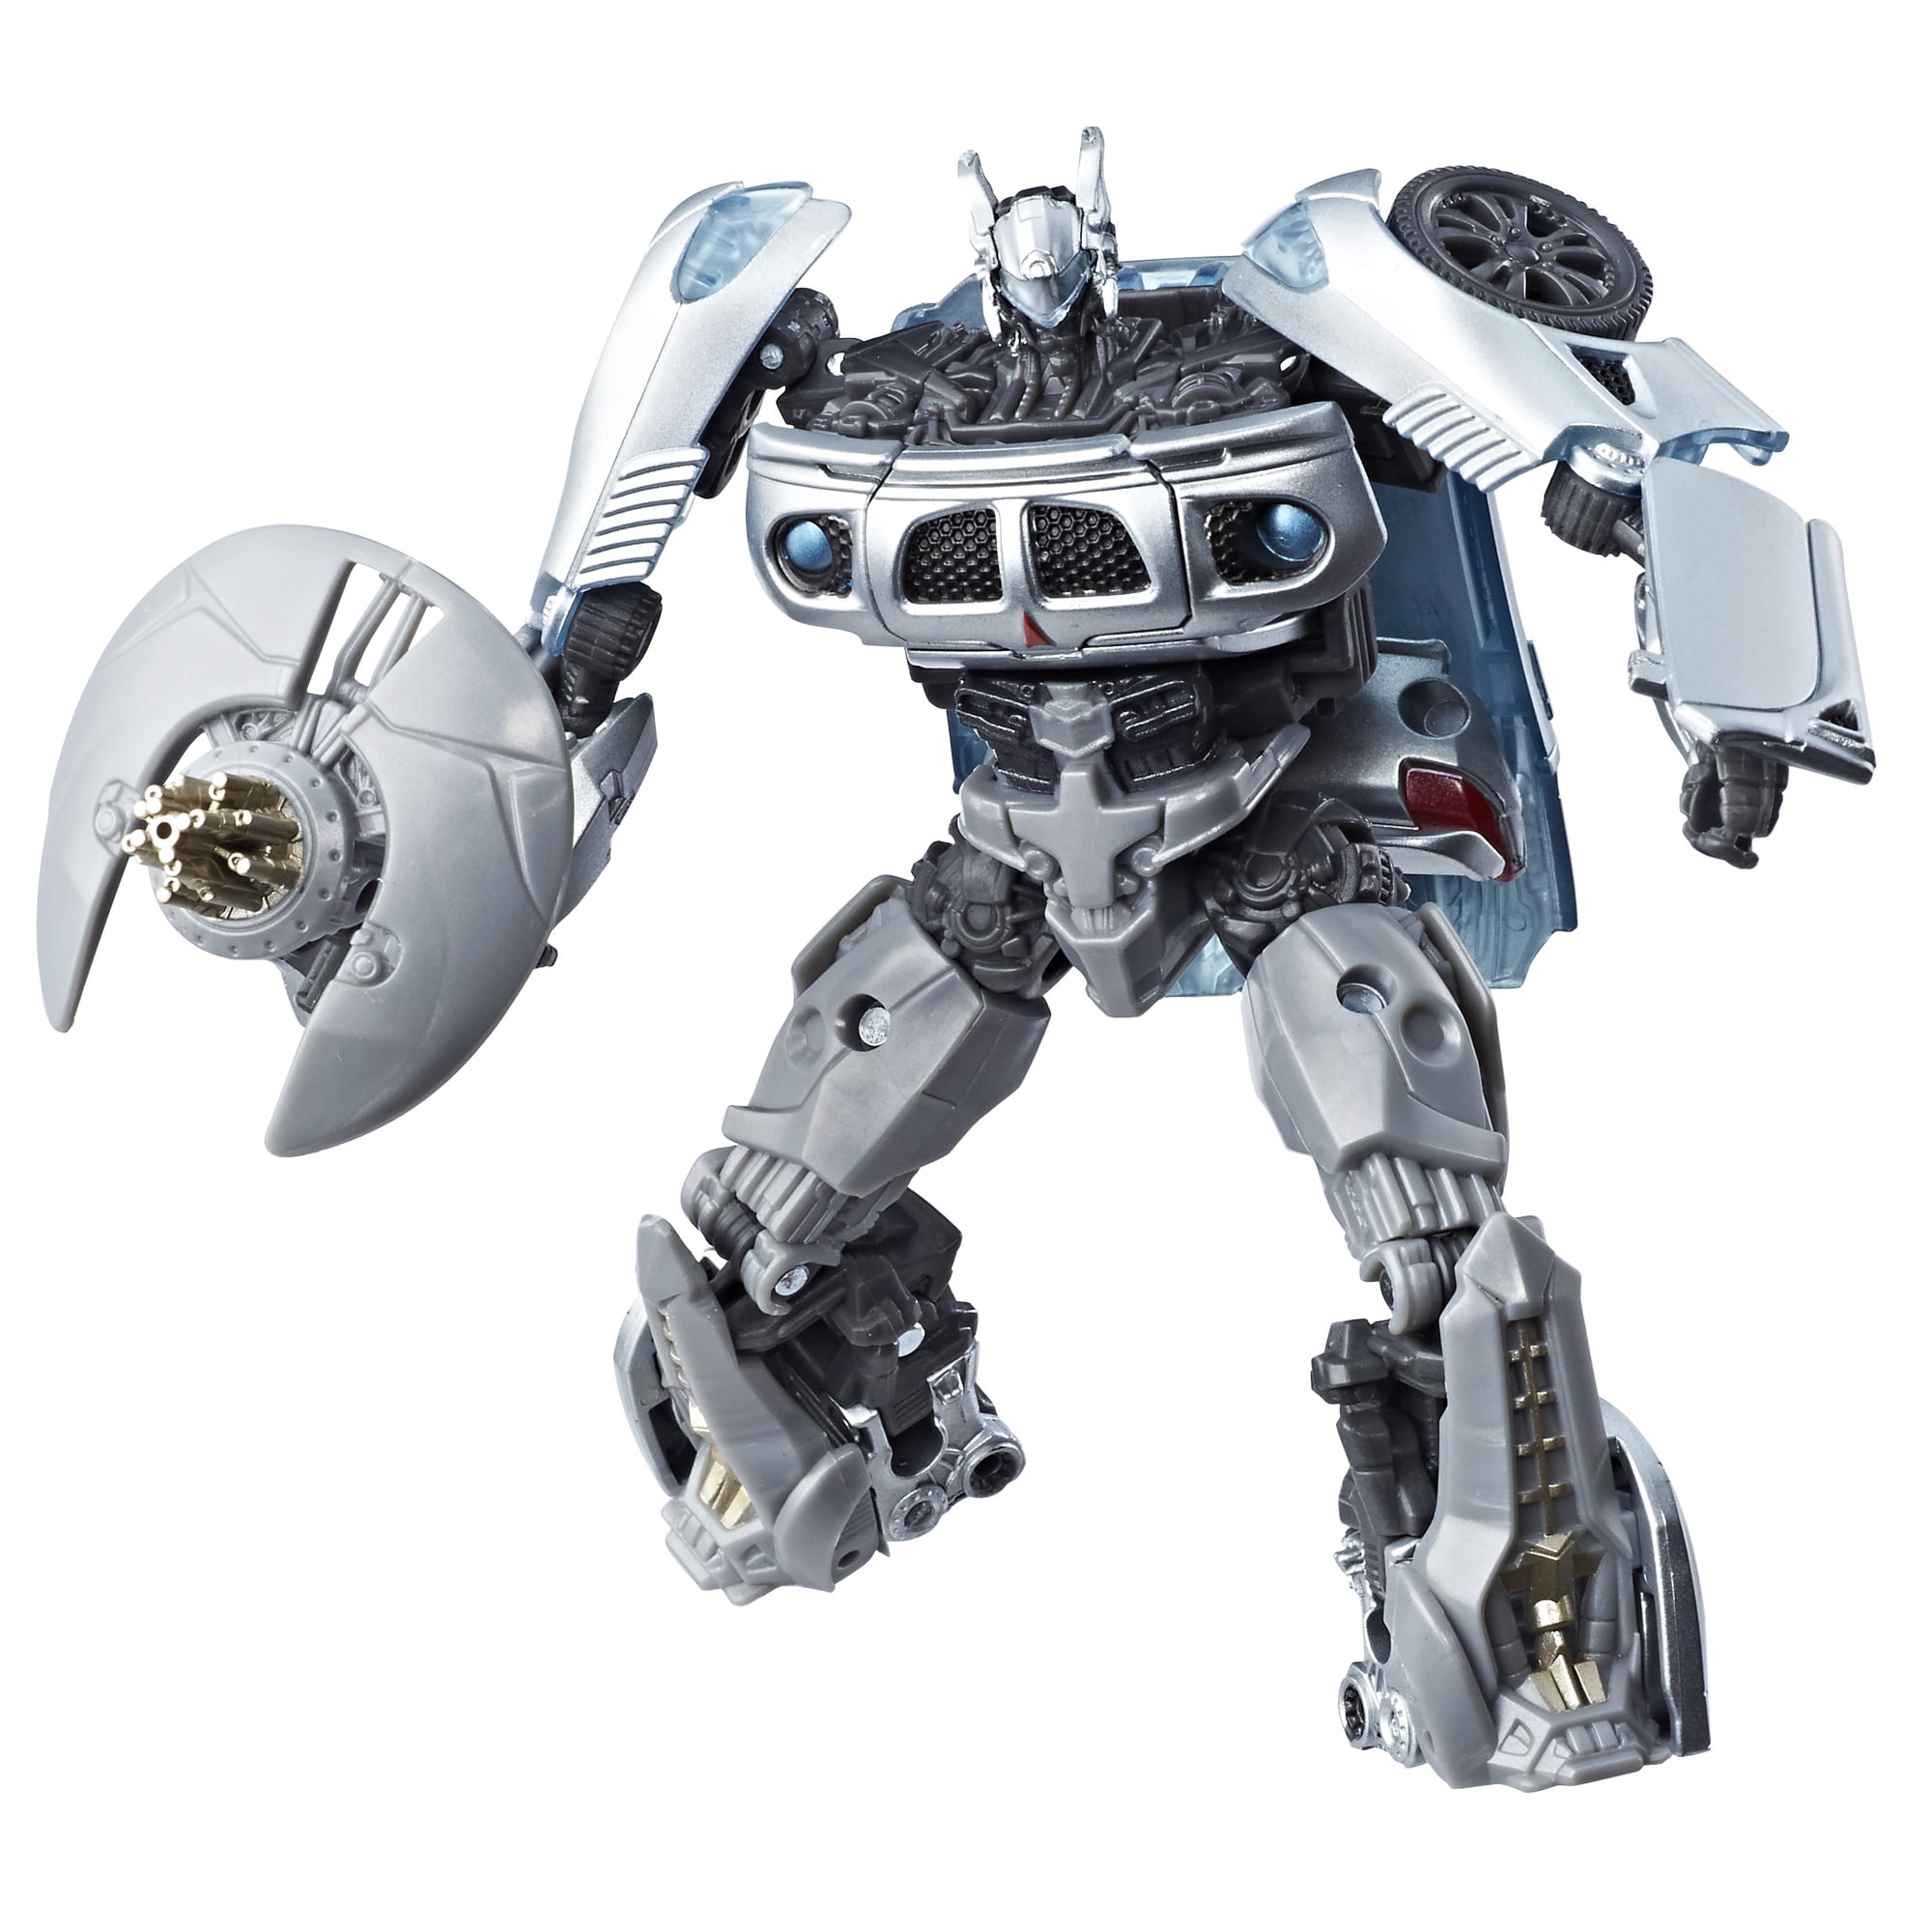 Hasbro Transformers Movie Deluxe Autobot Jazz Action Figure for sale online 